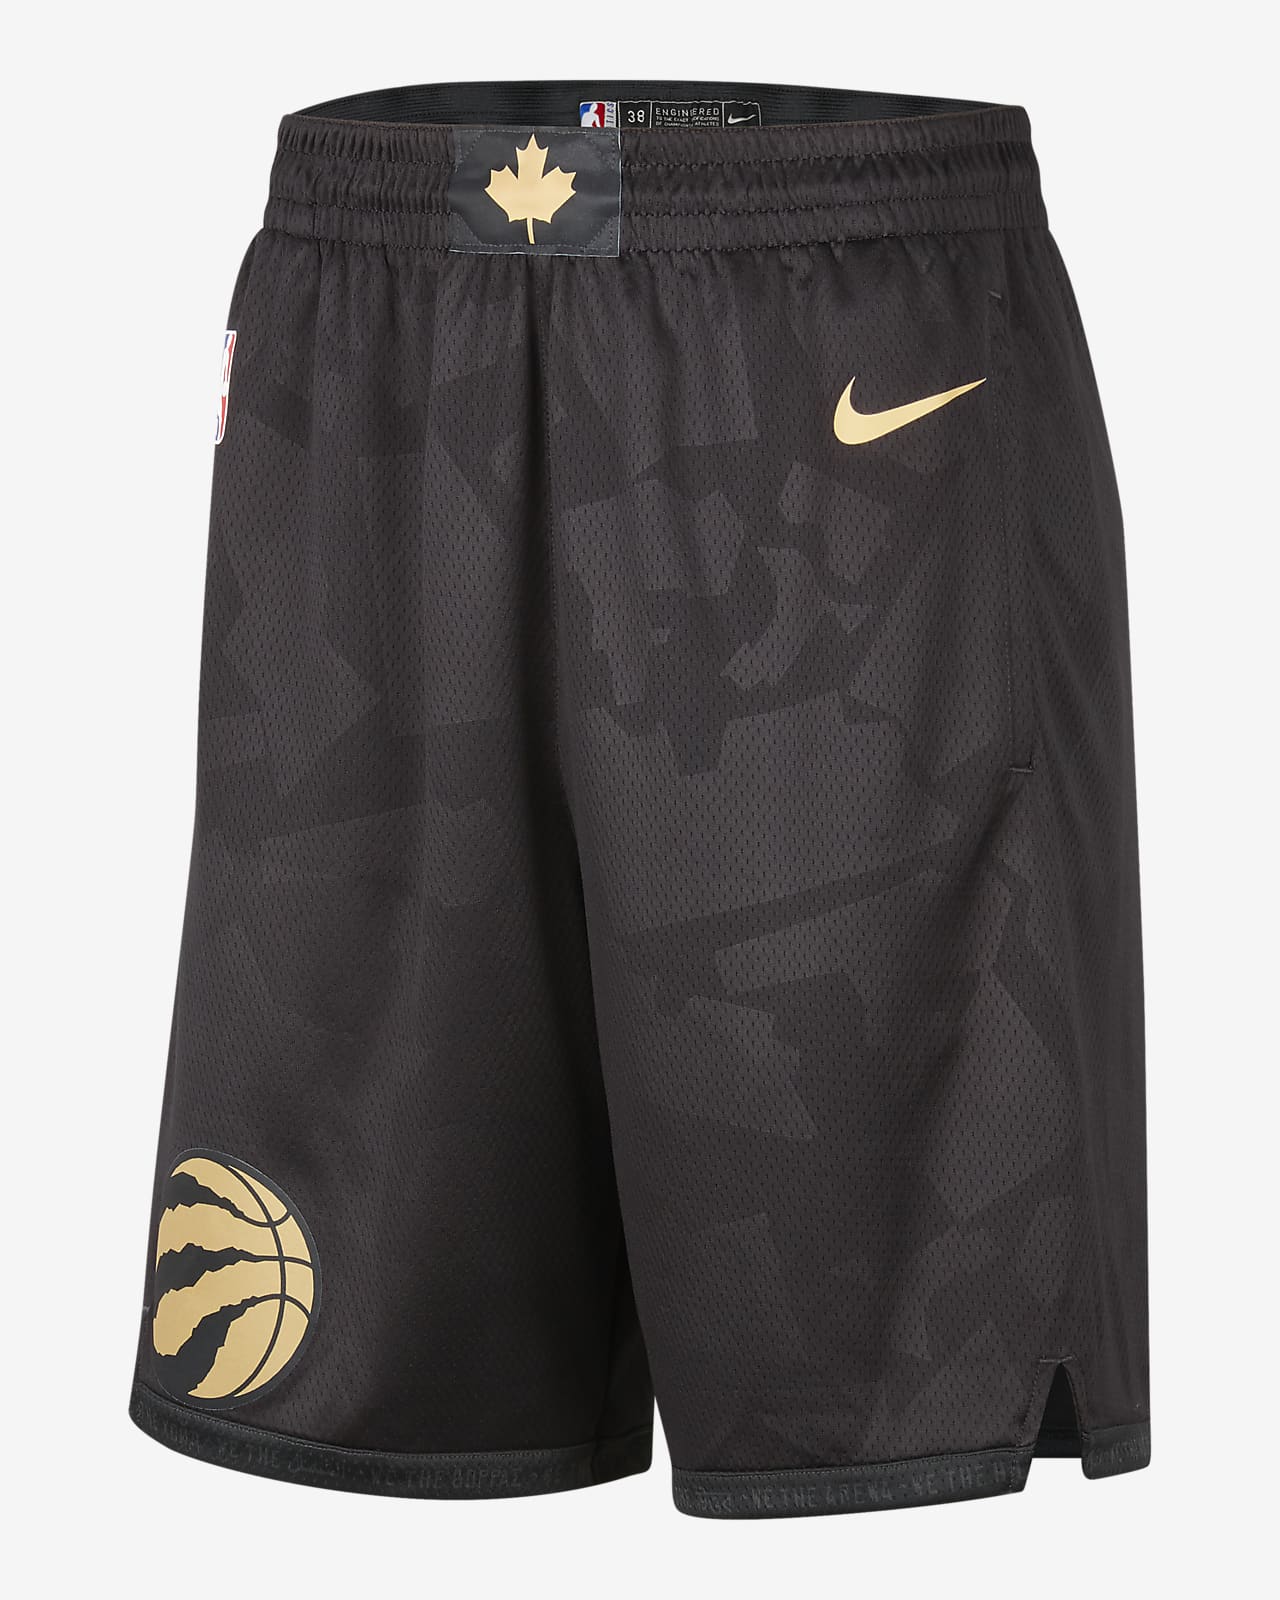 póngase en fila Precipicio Optimismo Toronto Raptors City Edition Pantalón corto Nike Dri-FIT Swingman de la NBA  - Hombre. Nike ES